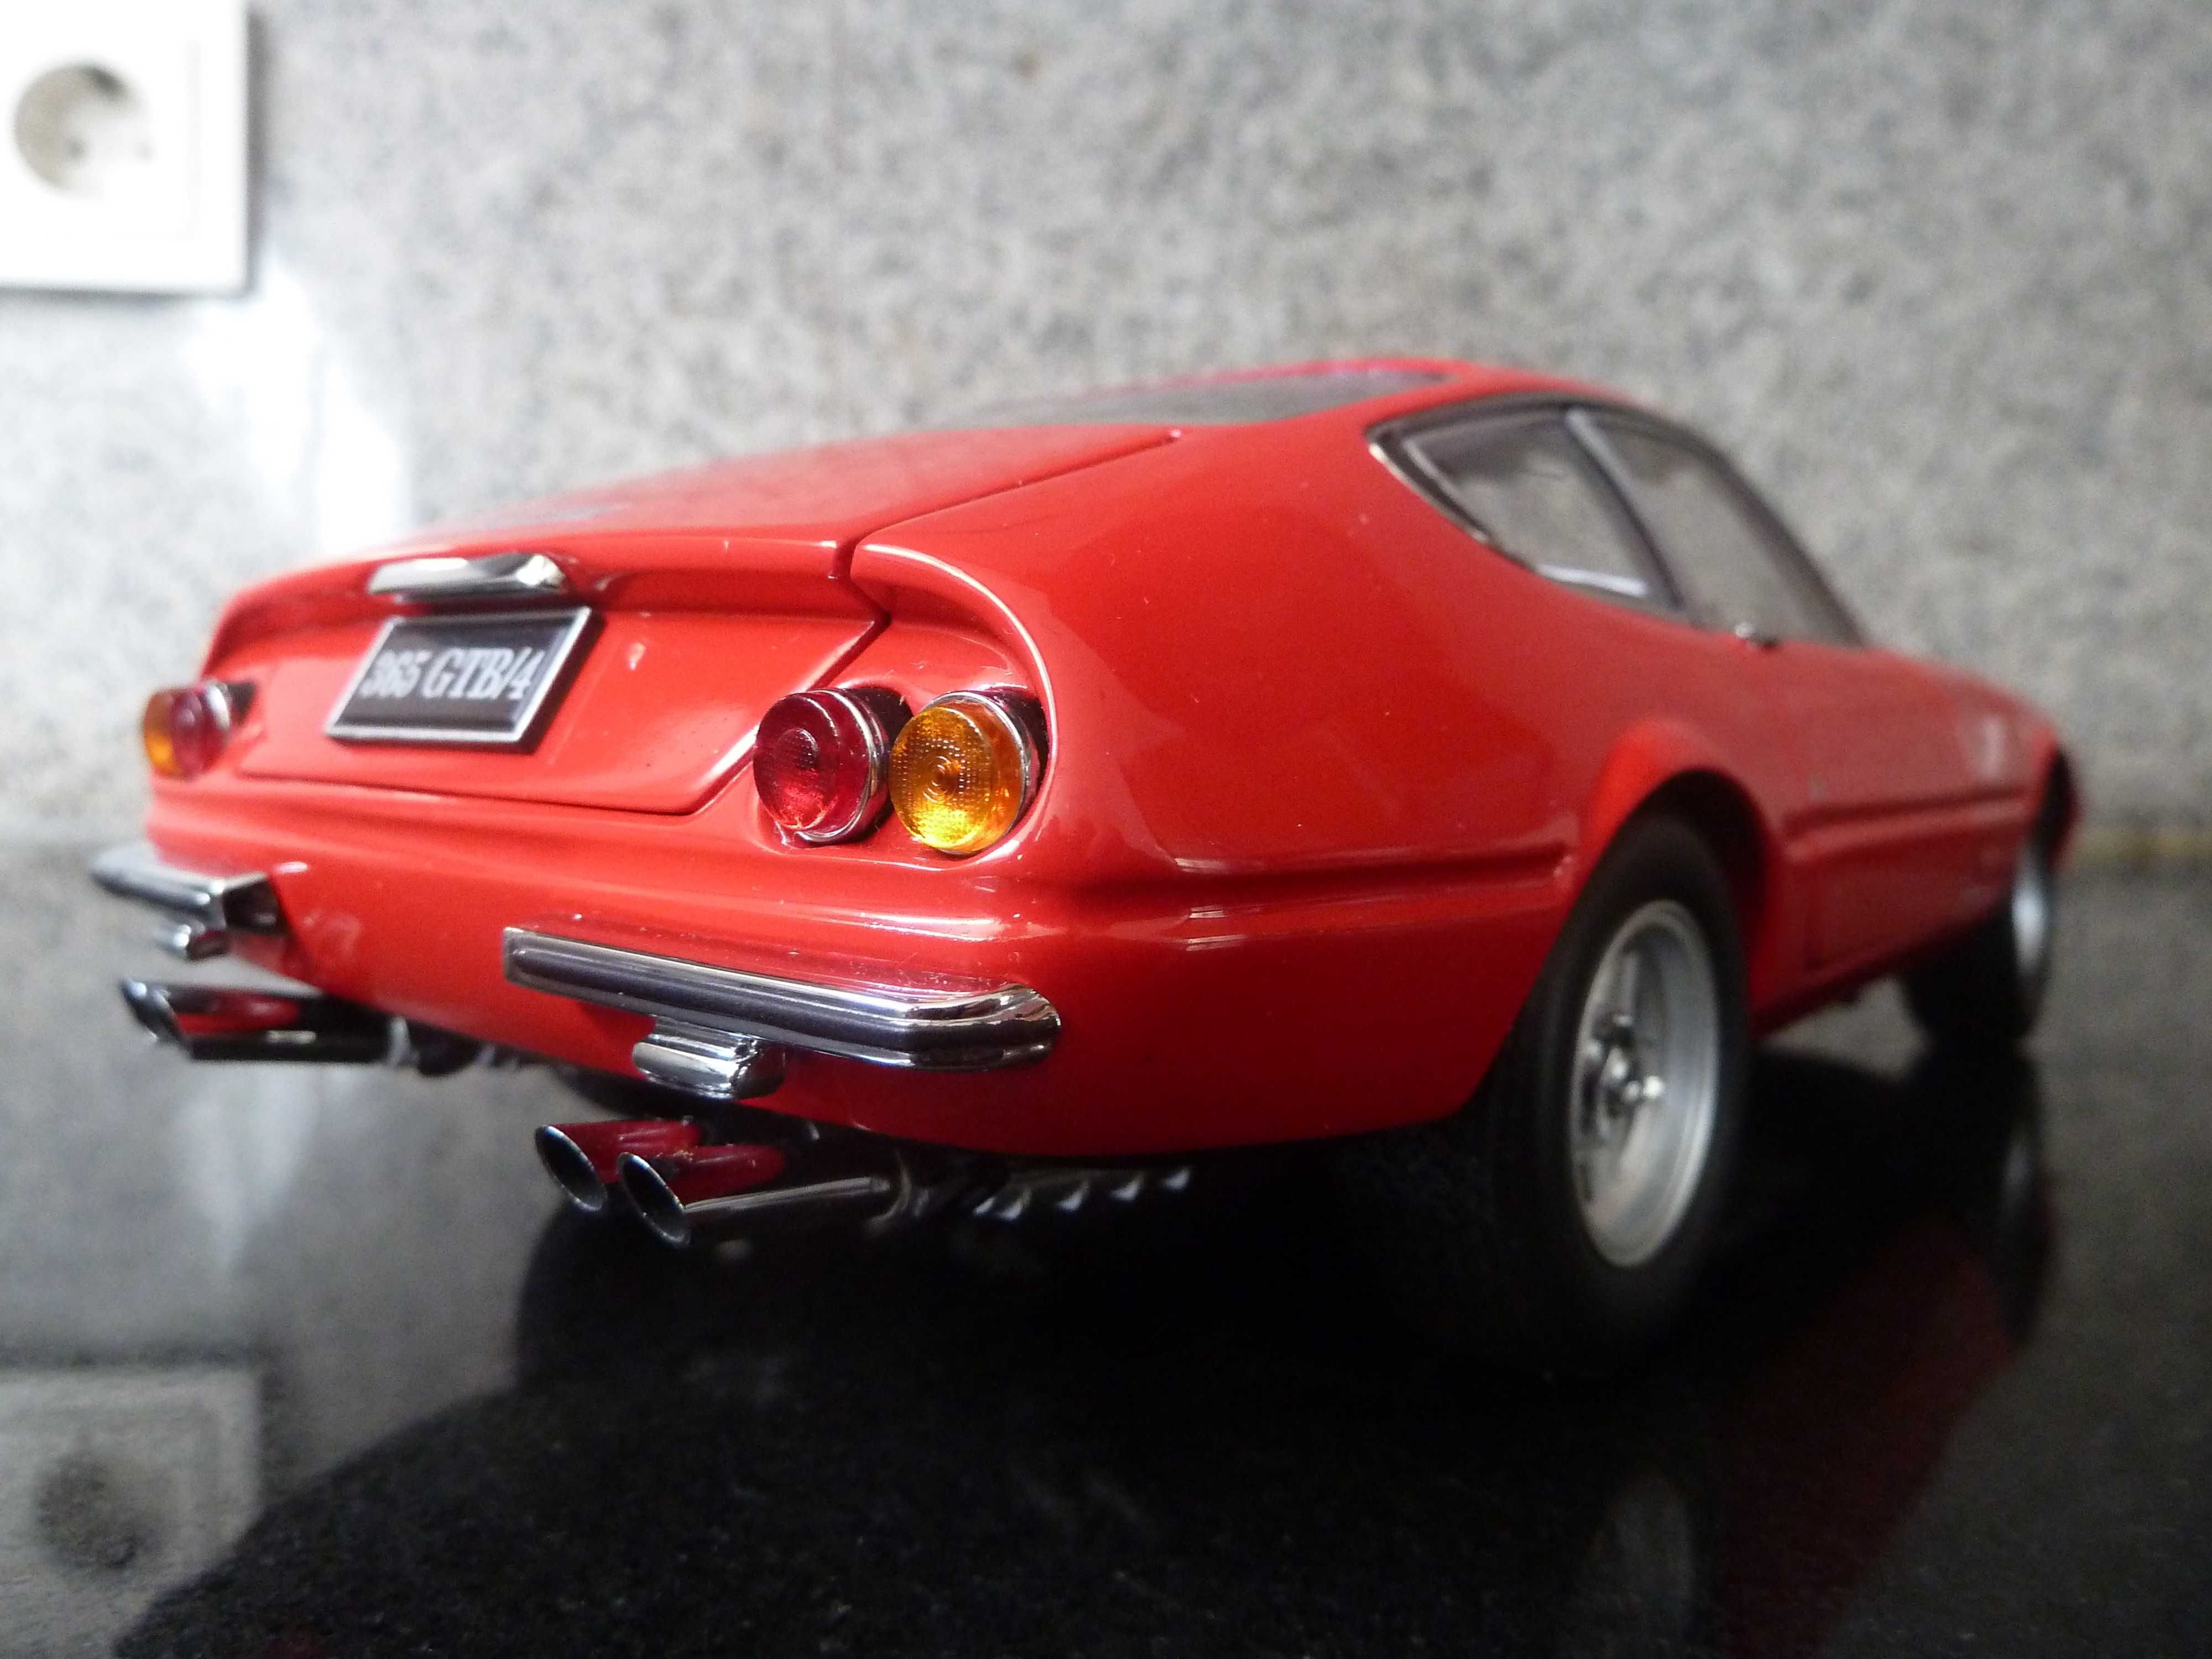 1:18 Kyosho, Ferrari 365 GTB4 Daytona 1969, AutoArt Minichamps